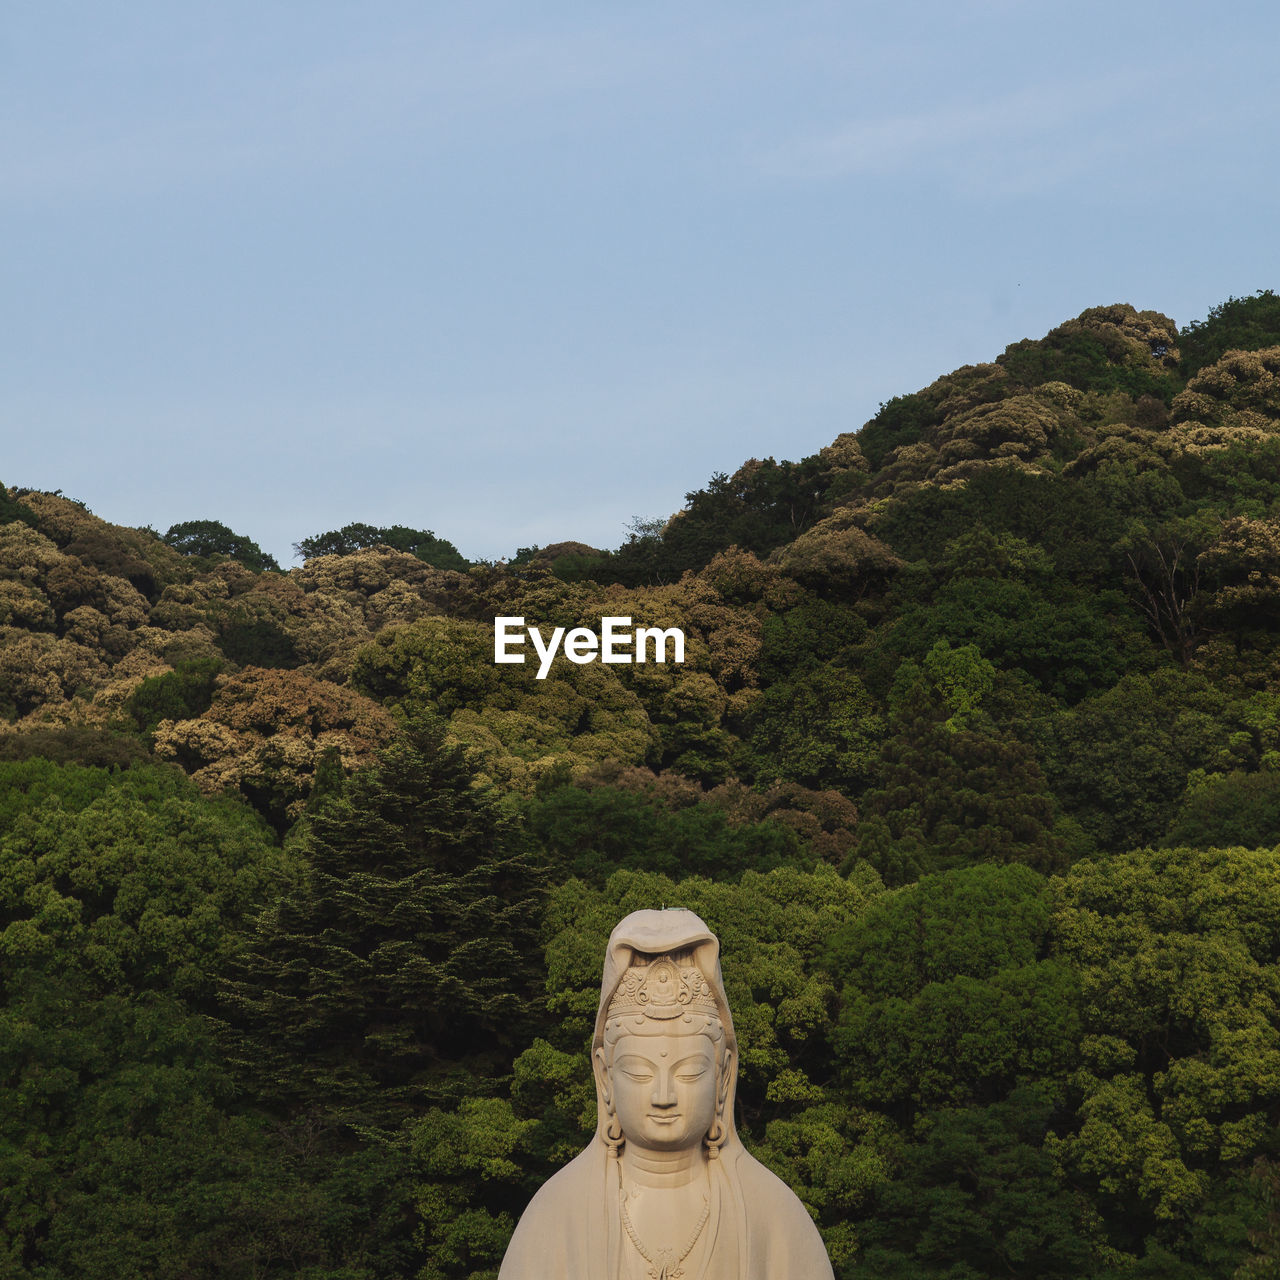 Budha statue in kyoto, japan